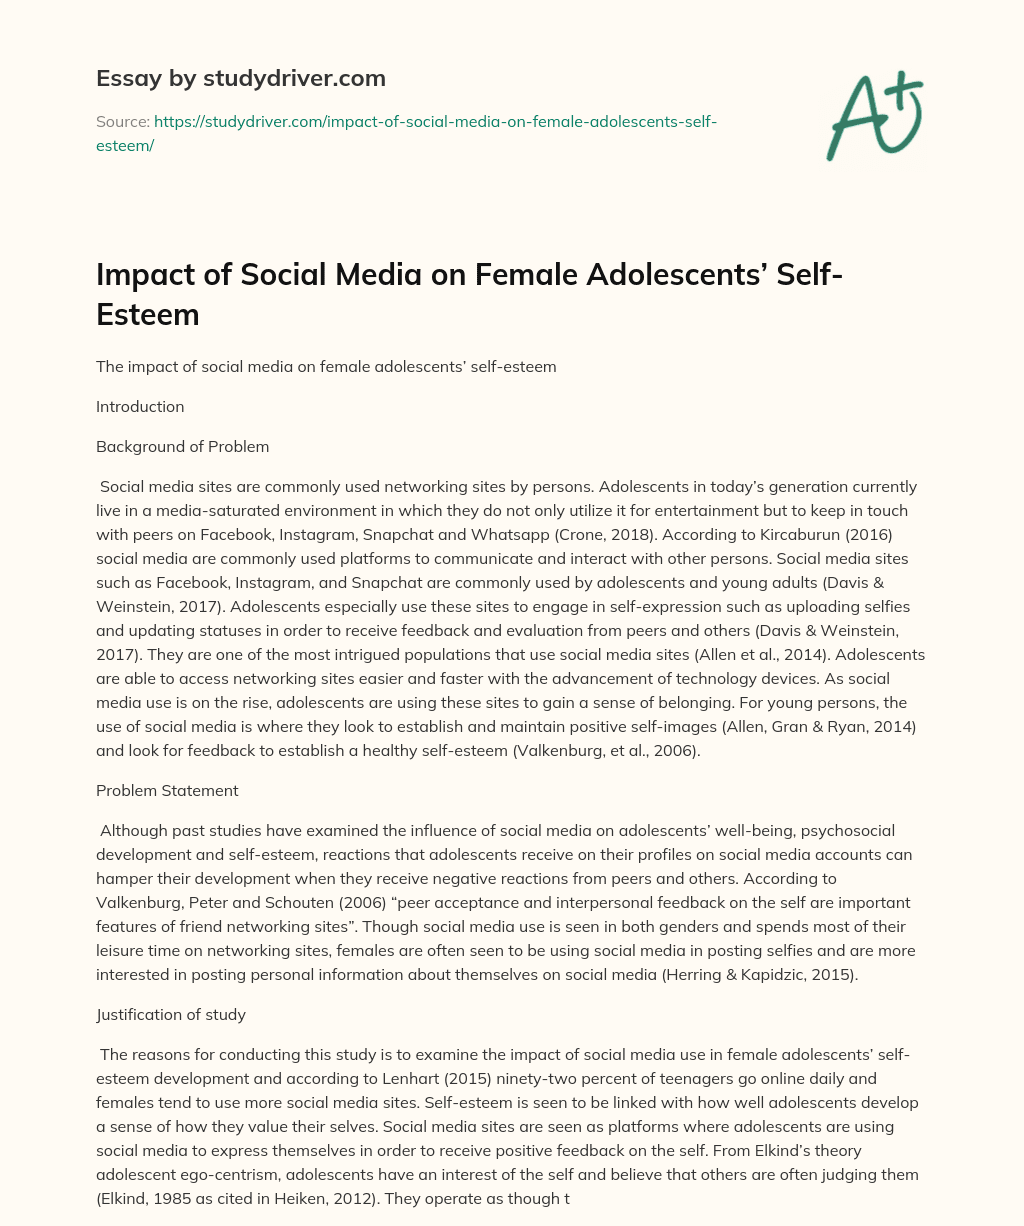 Impact of Social Media on Female Adolescents’ Self-Esteem essay